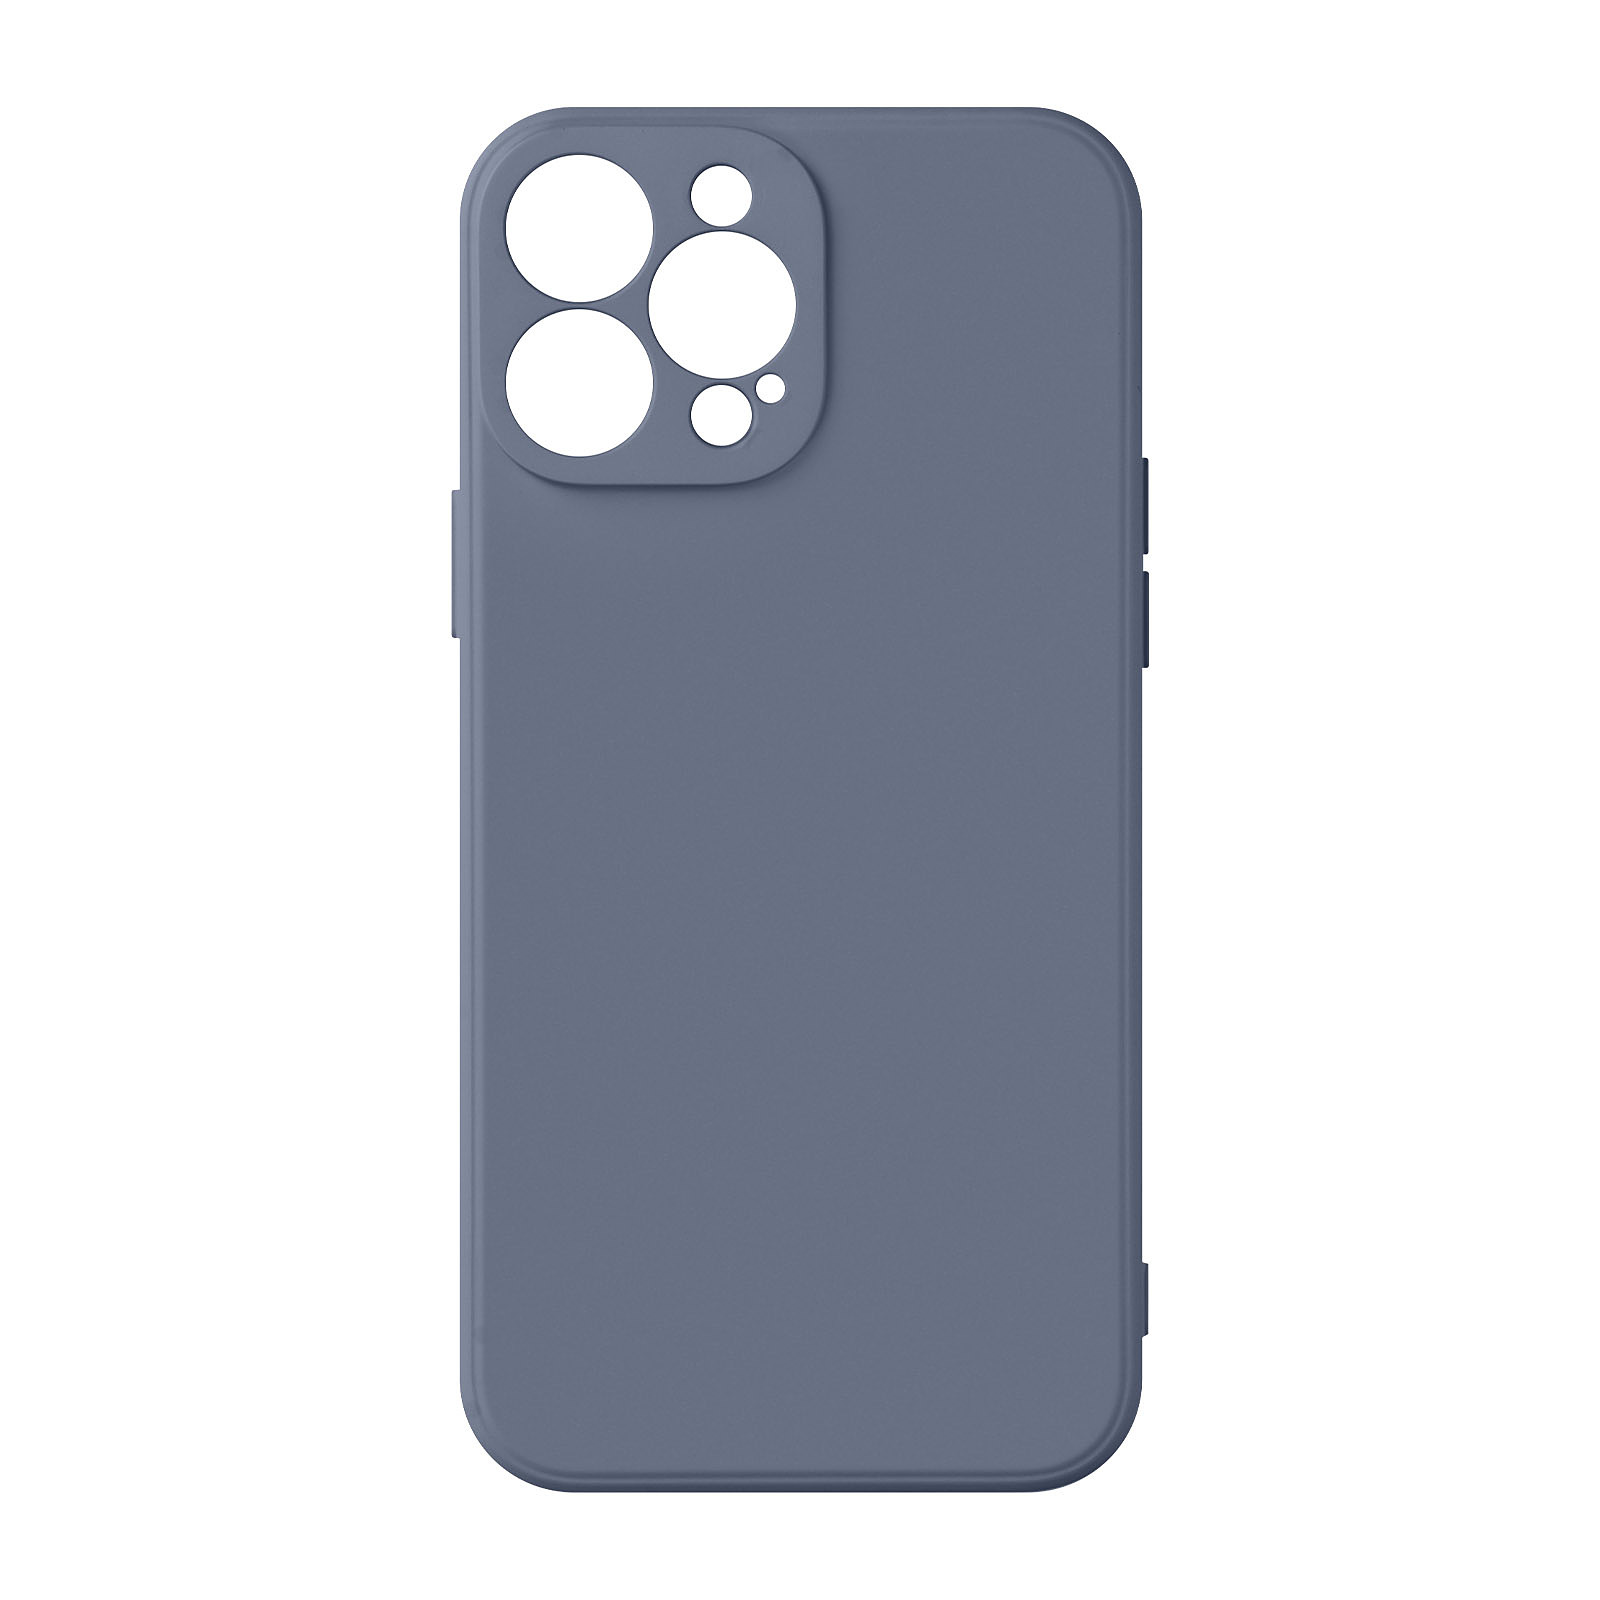 Avizar Coque pour iPhone 13 Pro Silicone Semi-Rigide avec Finition Soft Touch Bleu - Coque telephone Avizar